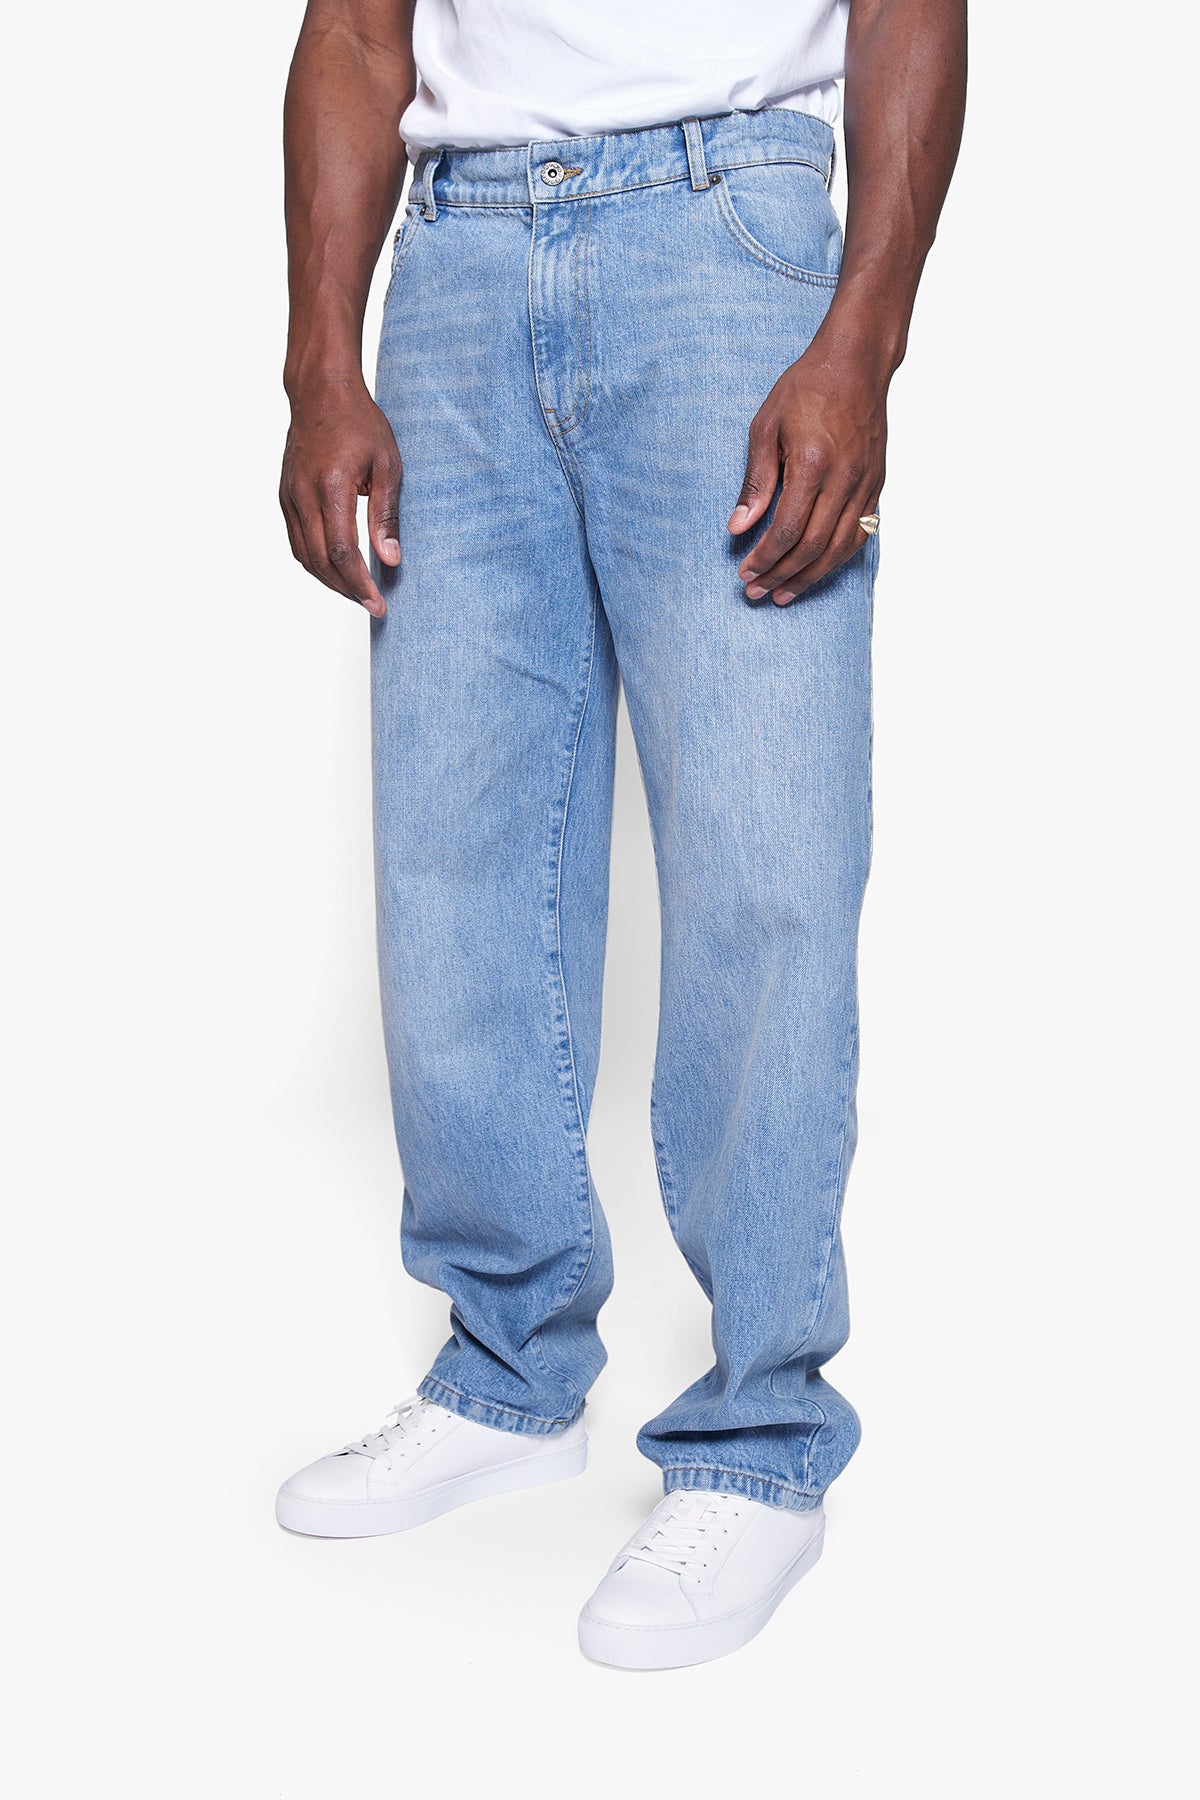 Woodbird Leroy Sky Jeans Jeans Light Blue